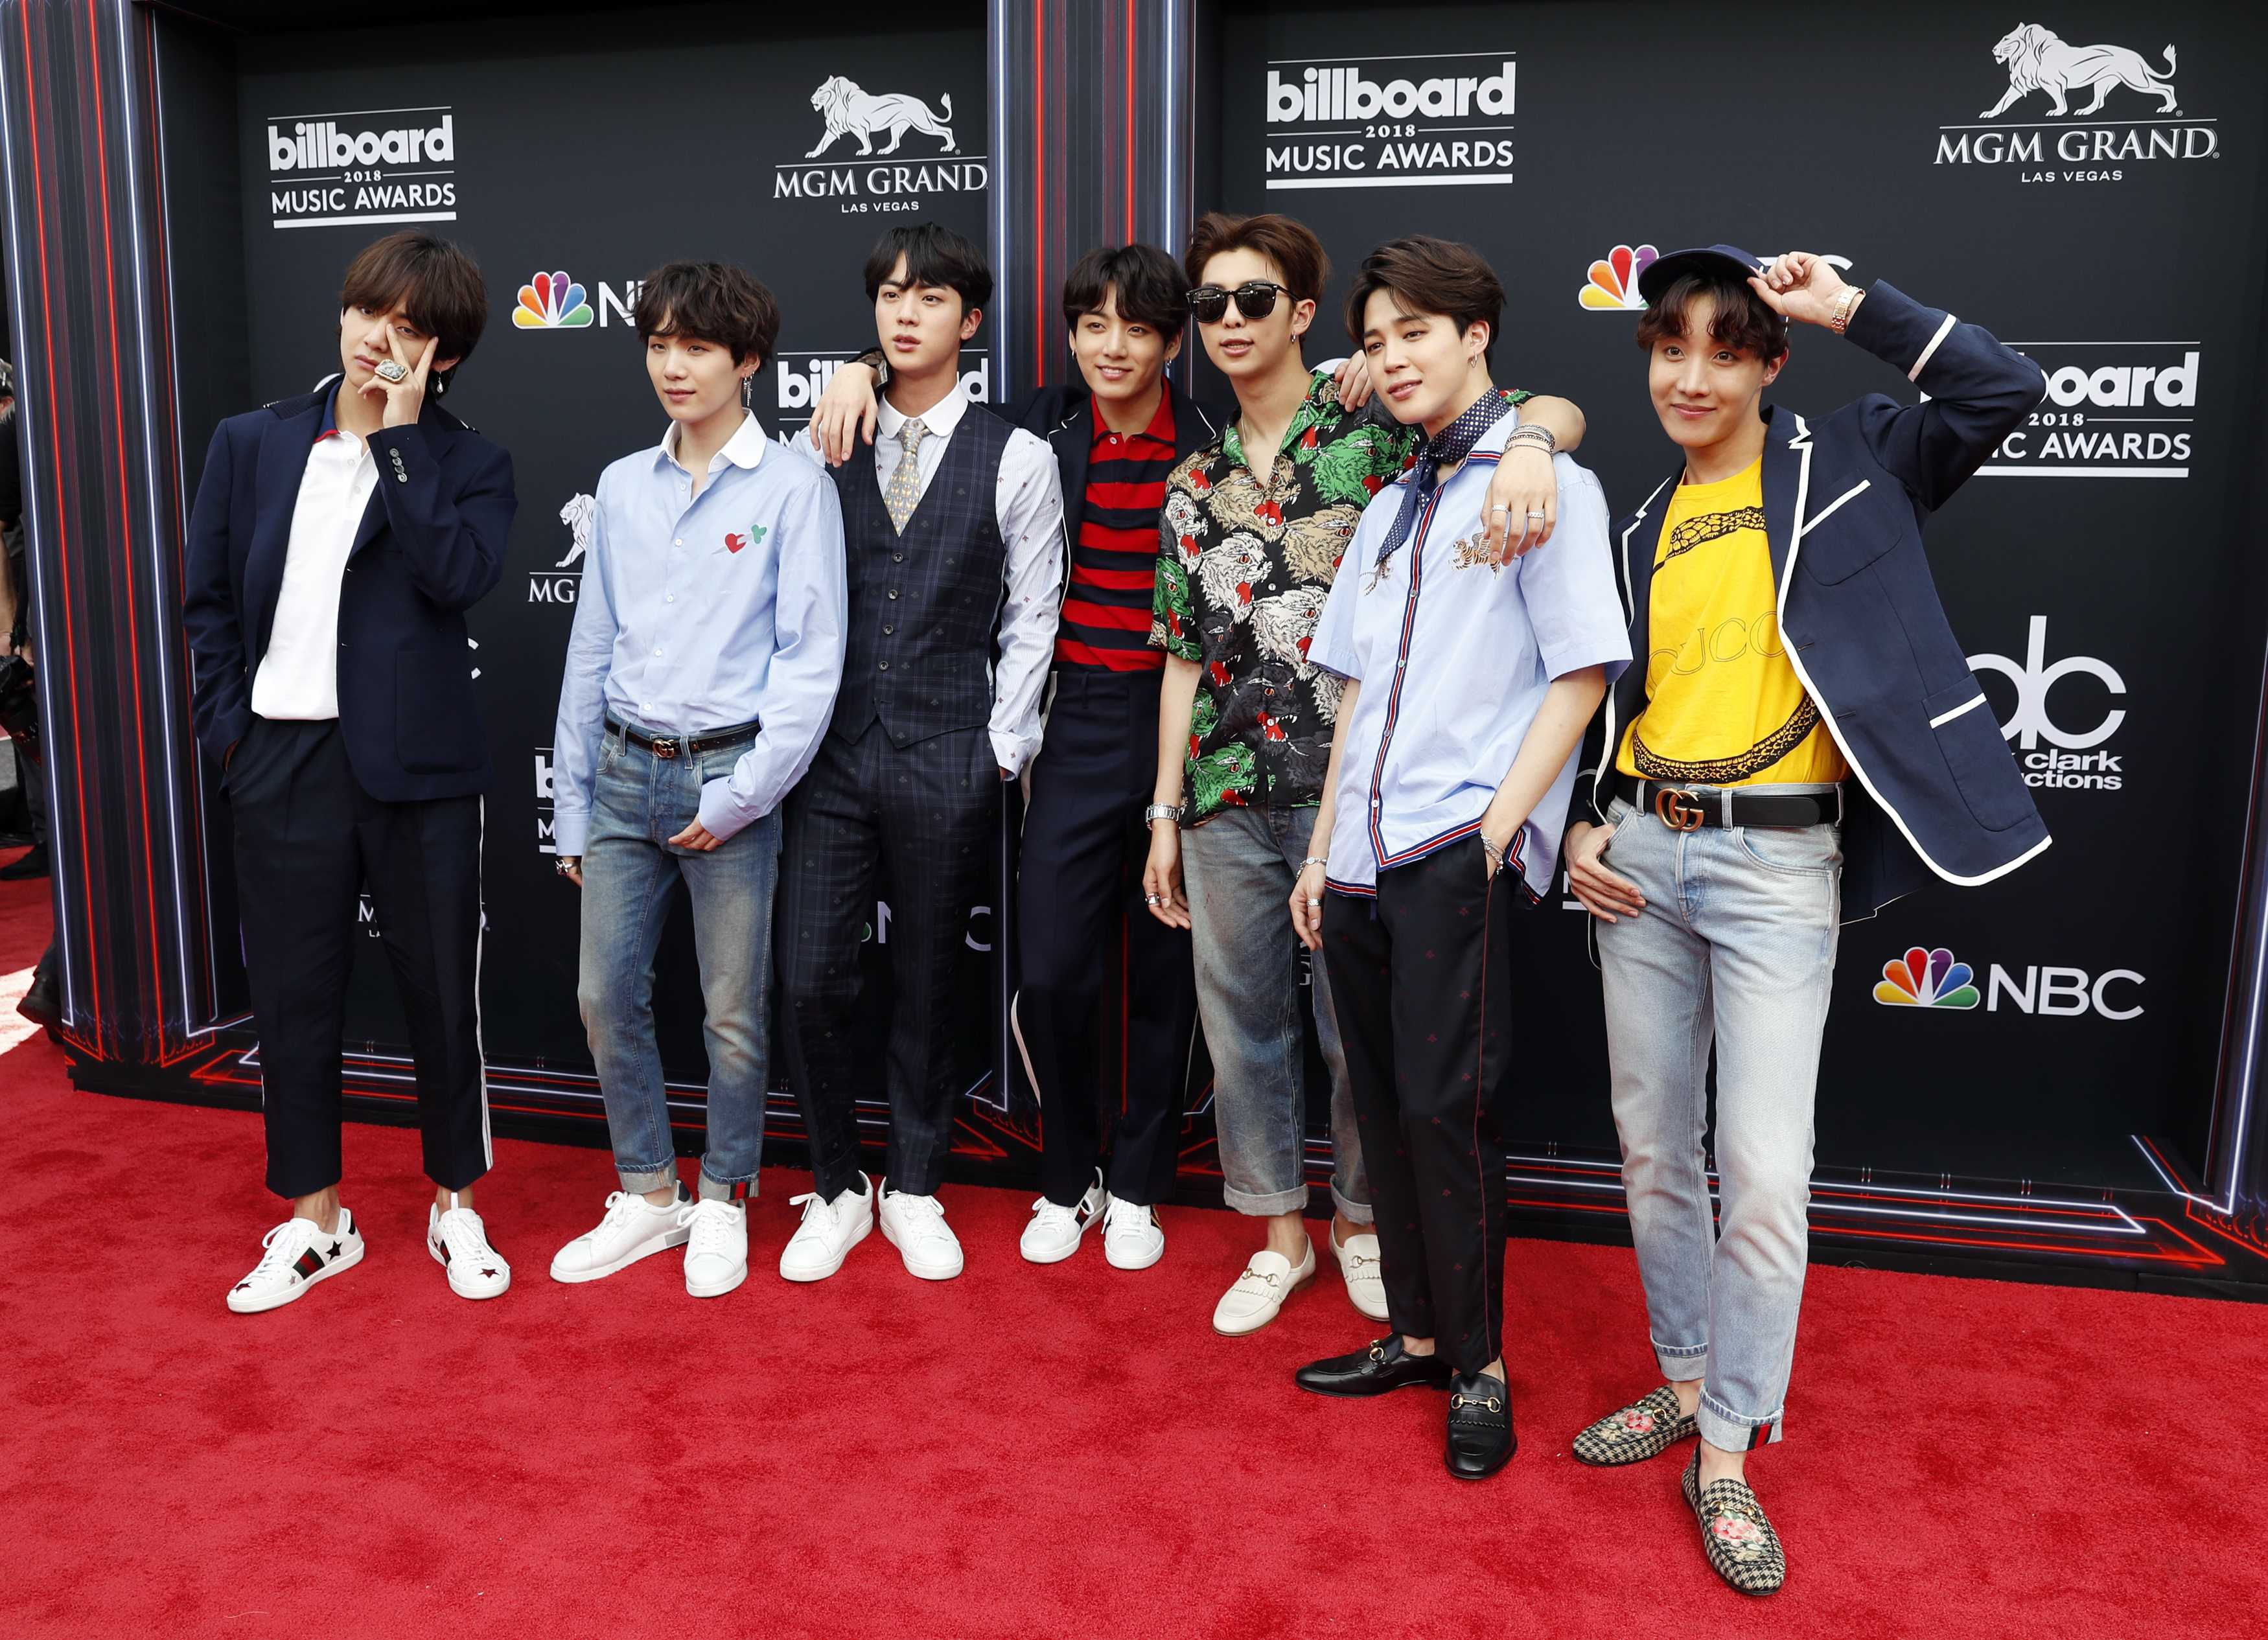 Musical group BTS arrives at 2018 Billboard Music Awards in Las Vegas, Nevada, US. Photo: Reuters